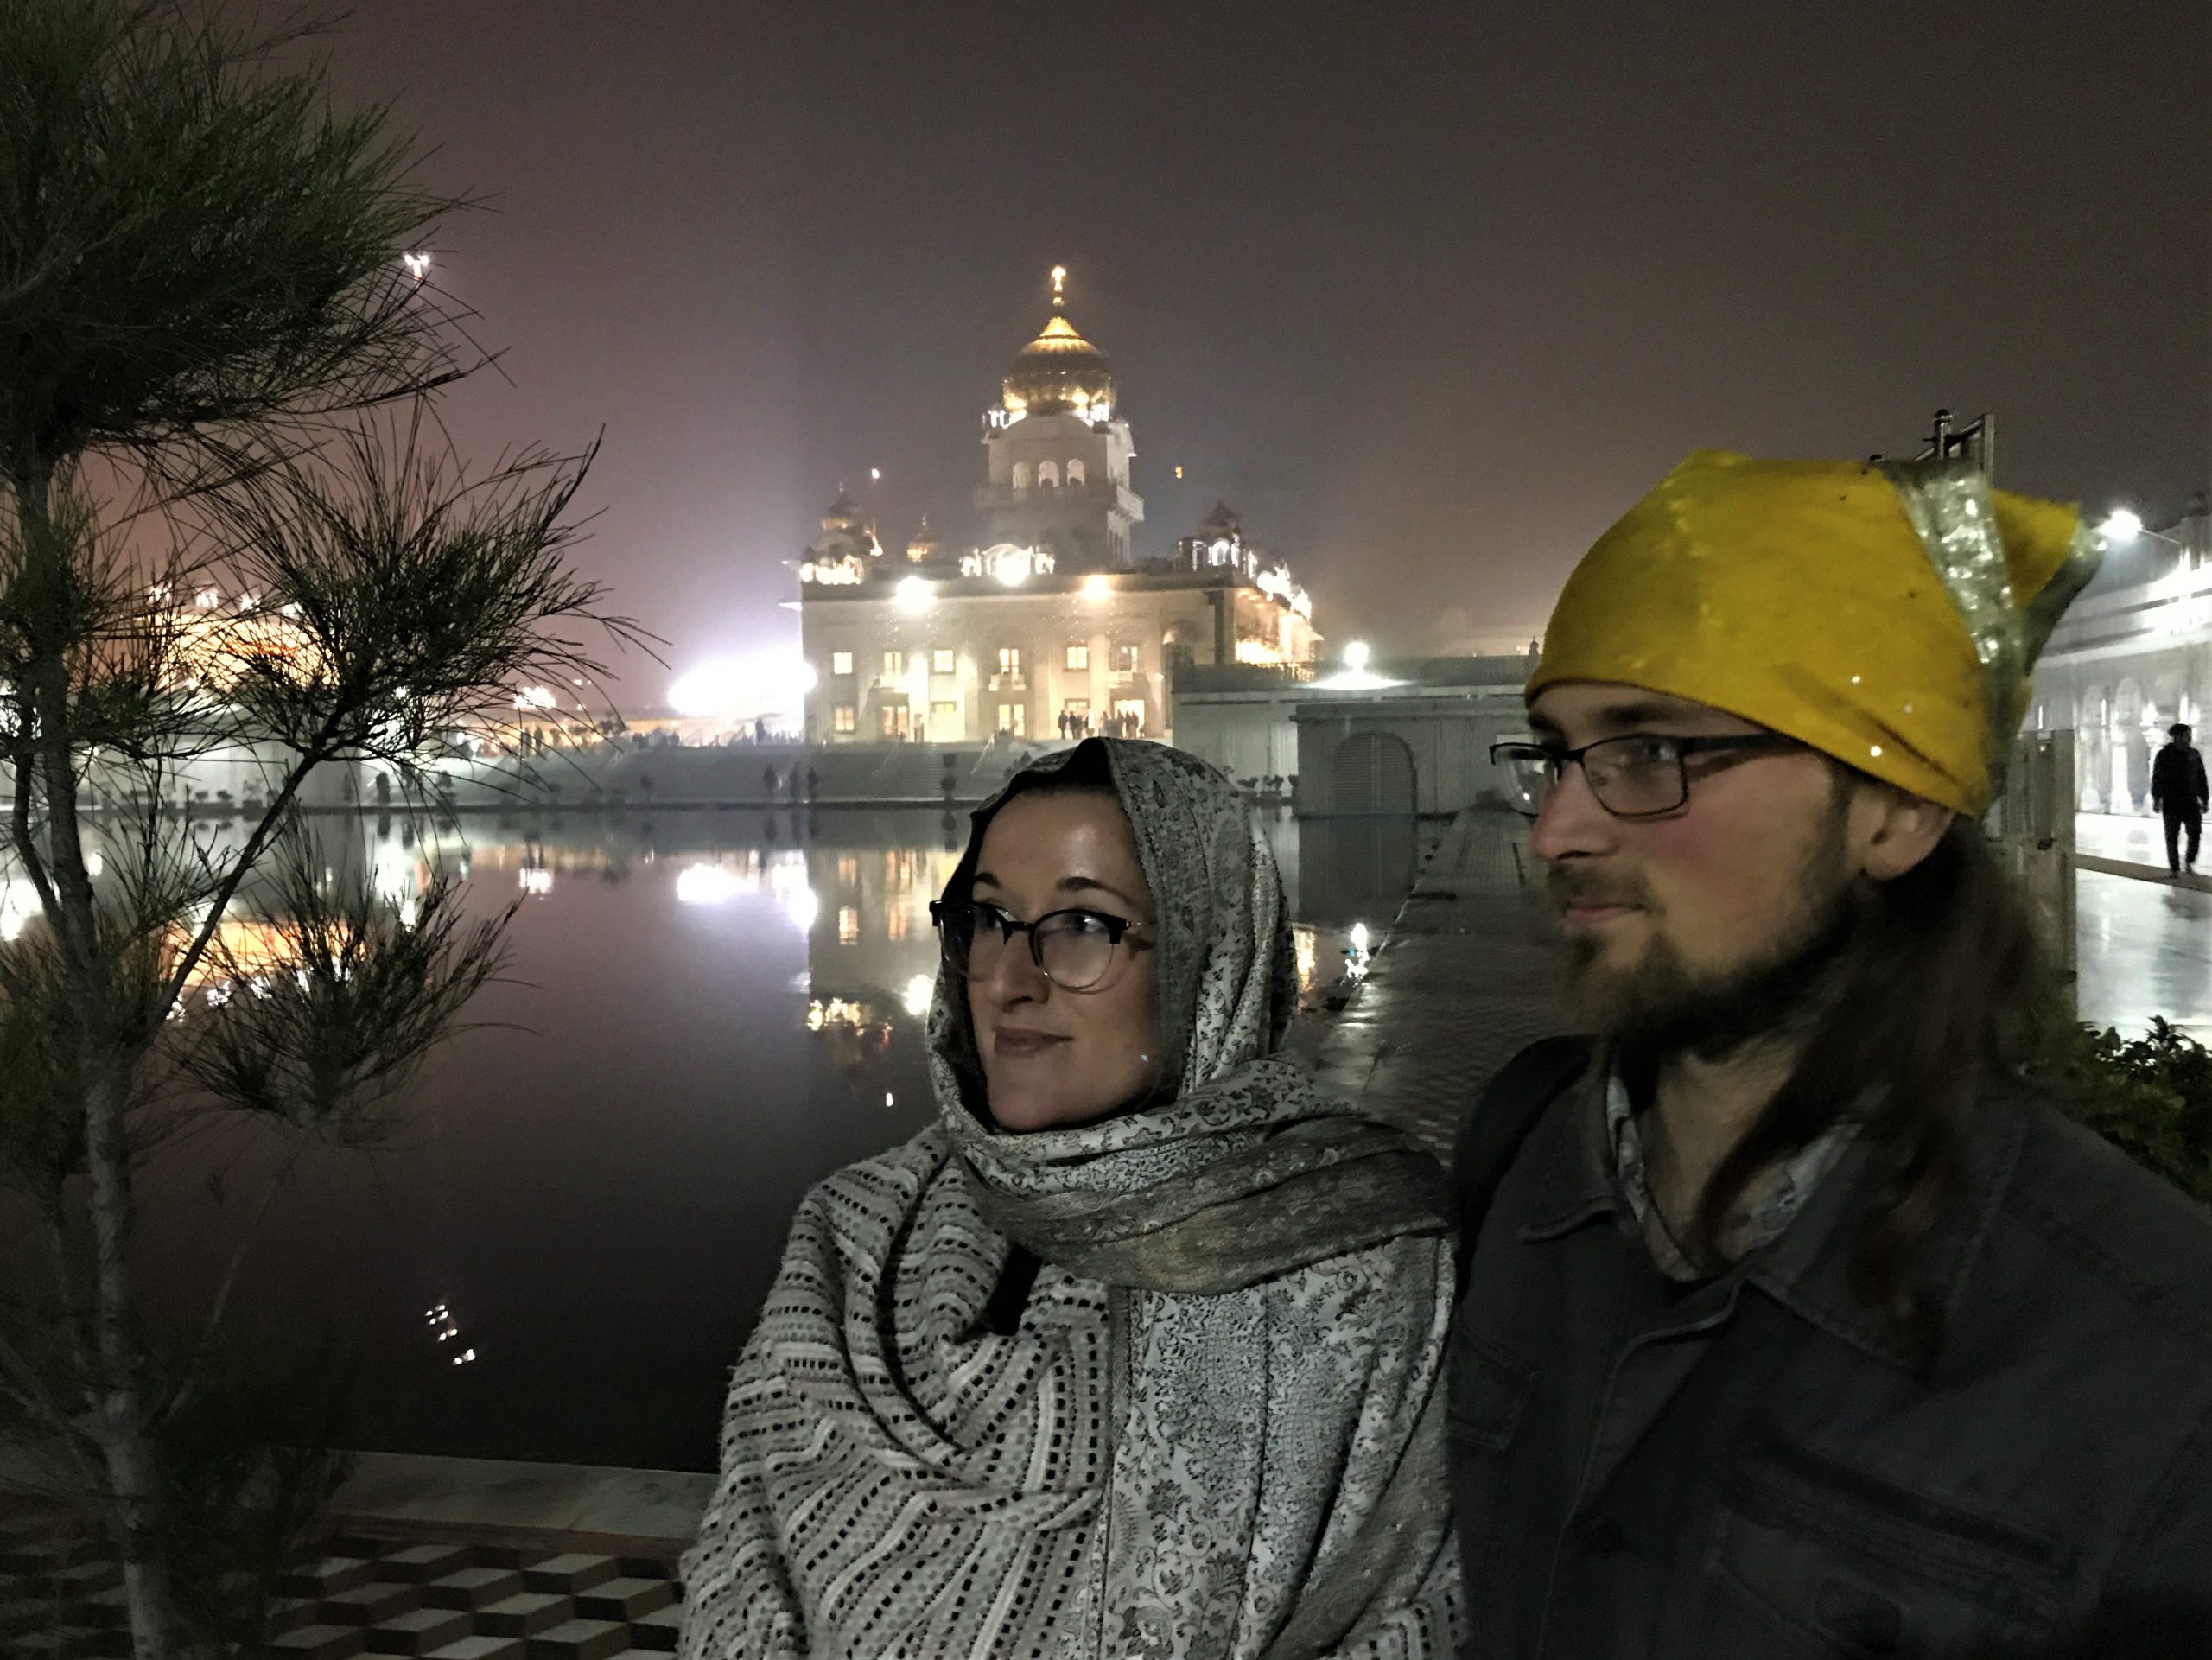 Felix and I with the Gurudwara Bangla Sahib temple in the background